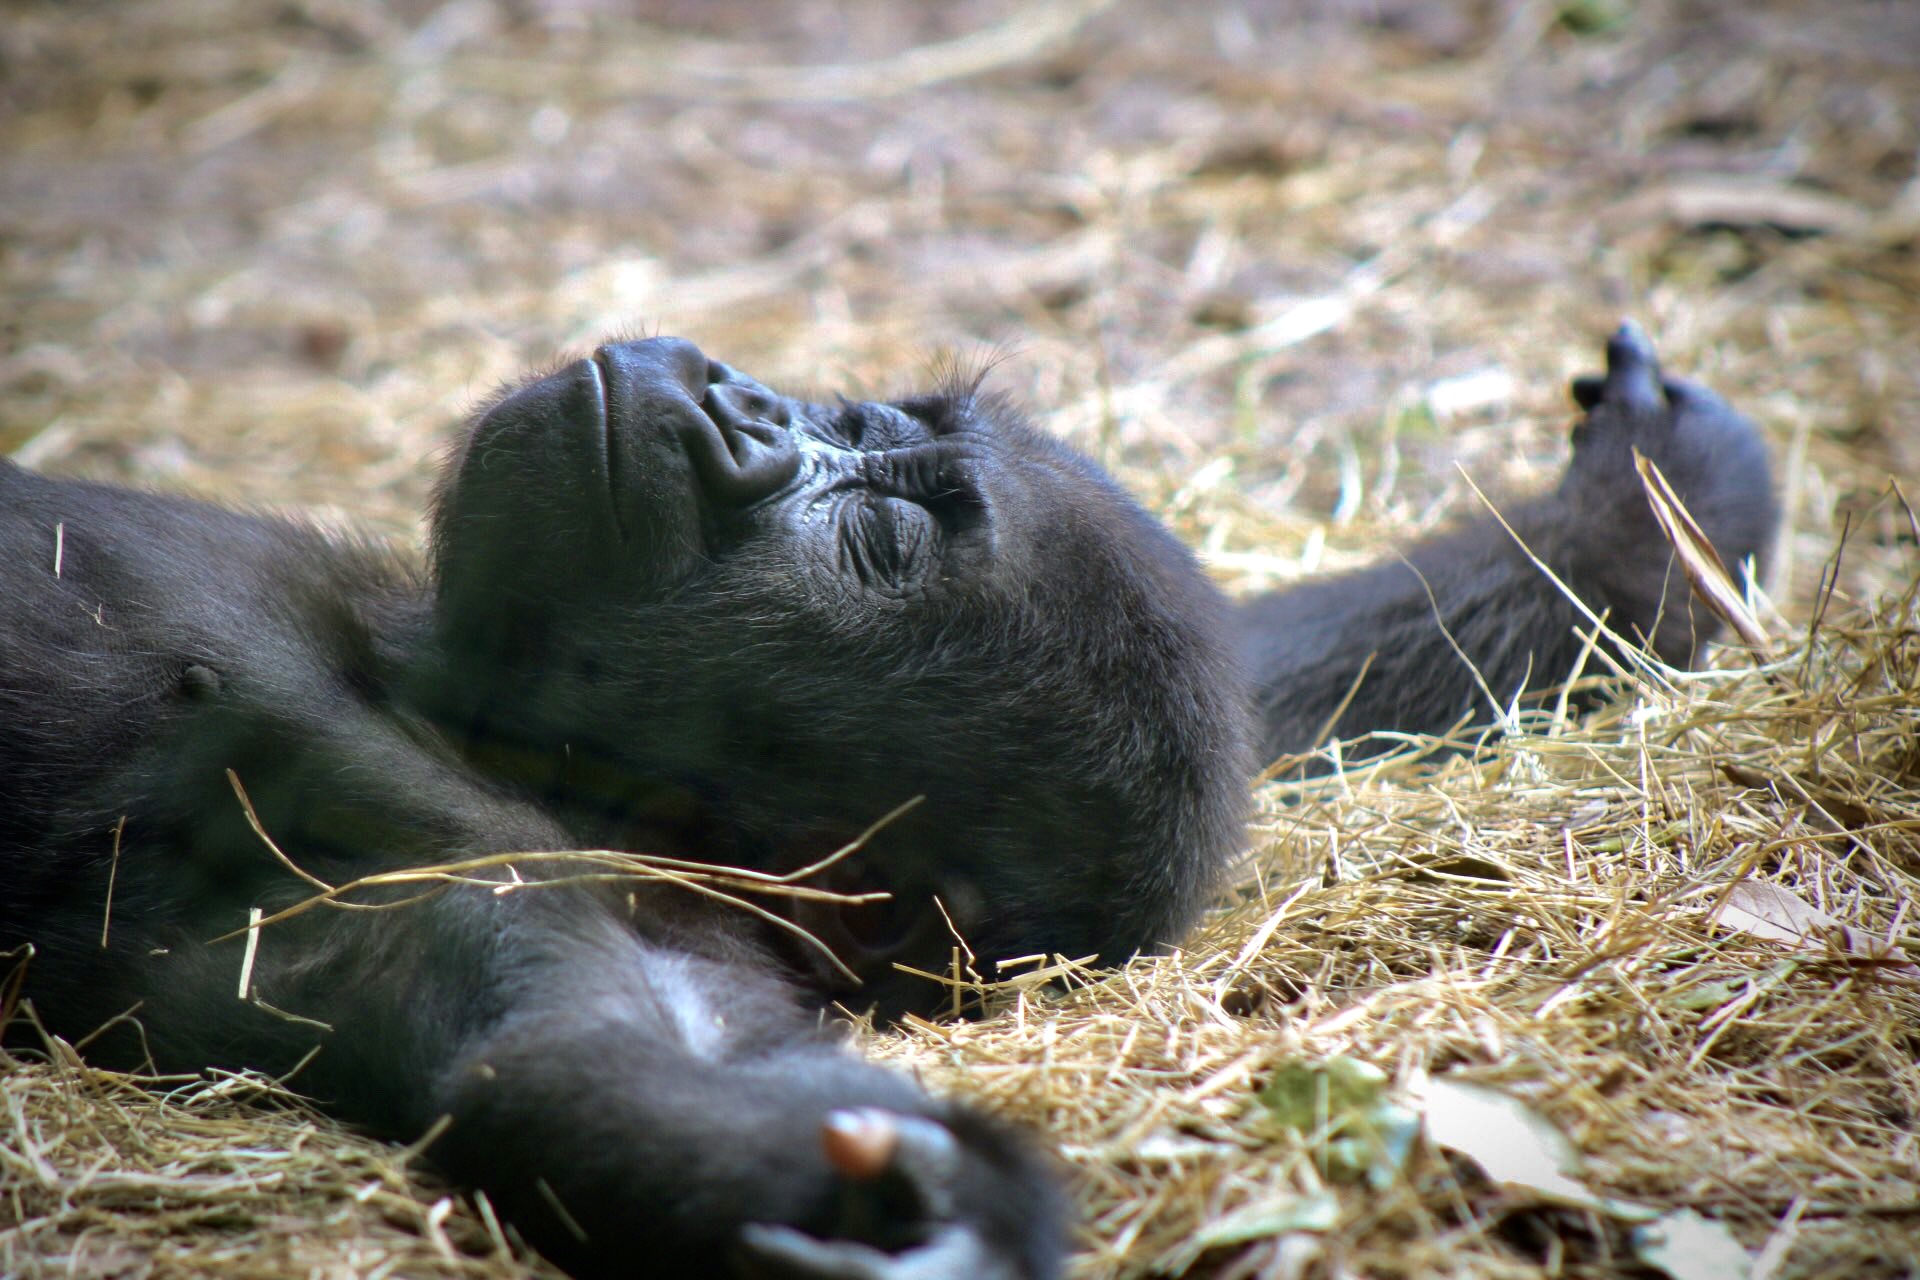 Baby gorilla resting - Disney's Animal Kingdom